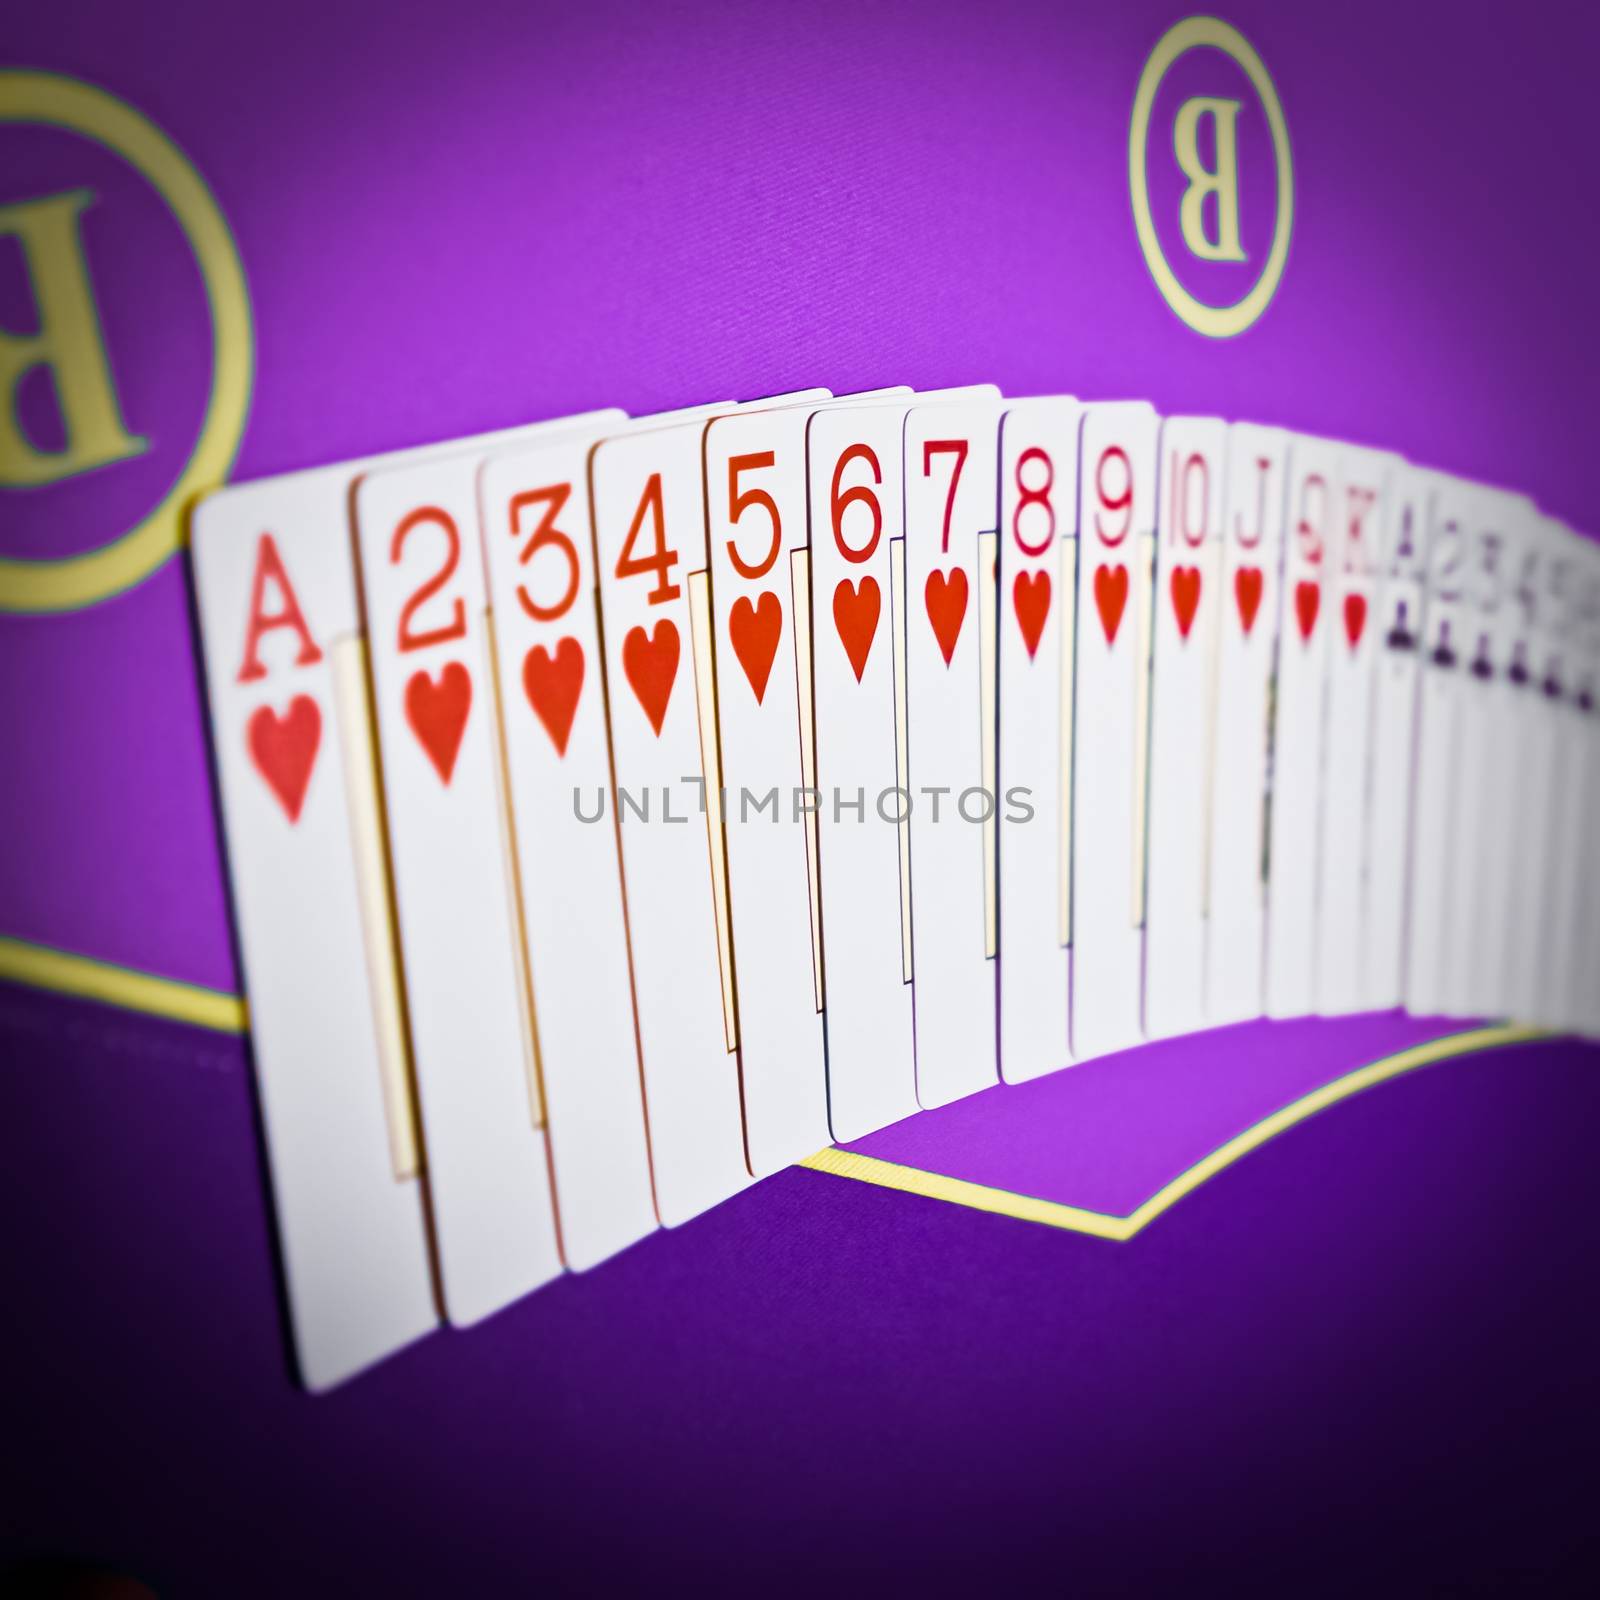 Playing cards game in casino, gambling ads